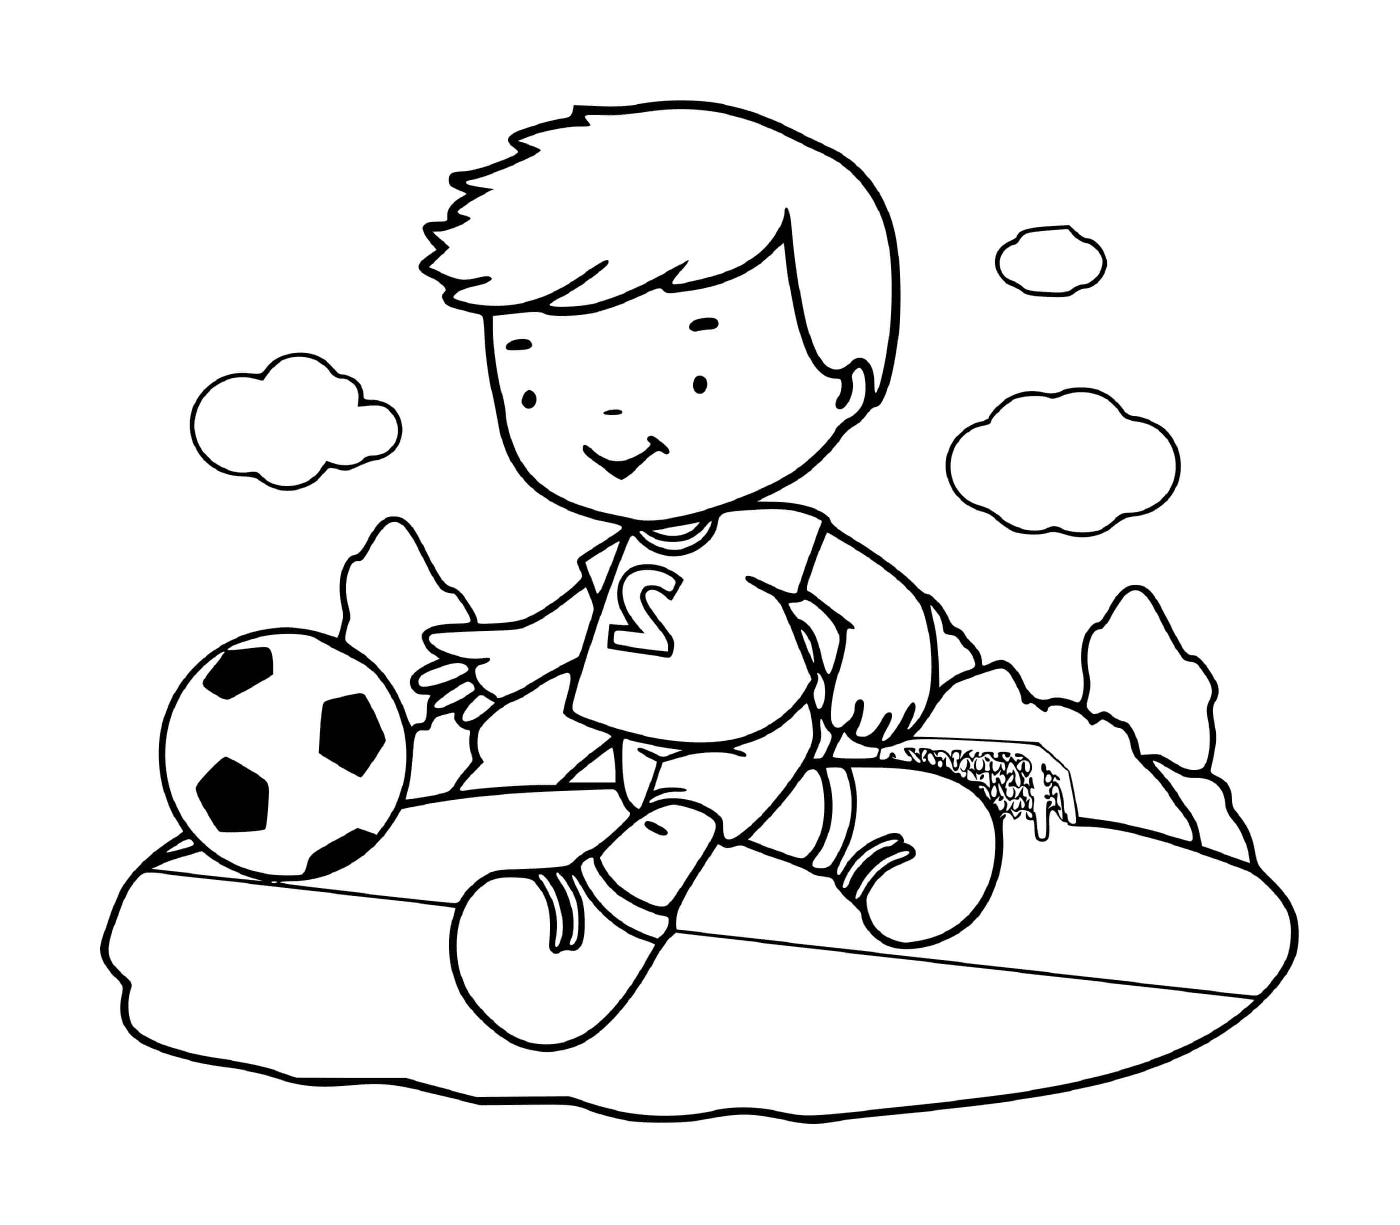  A boy plays football enthusiastically 